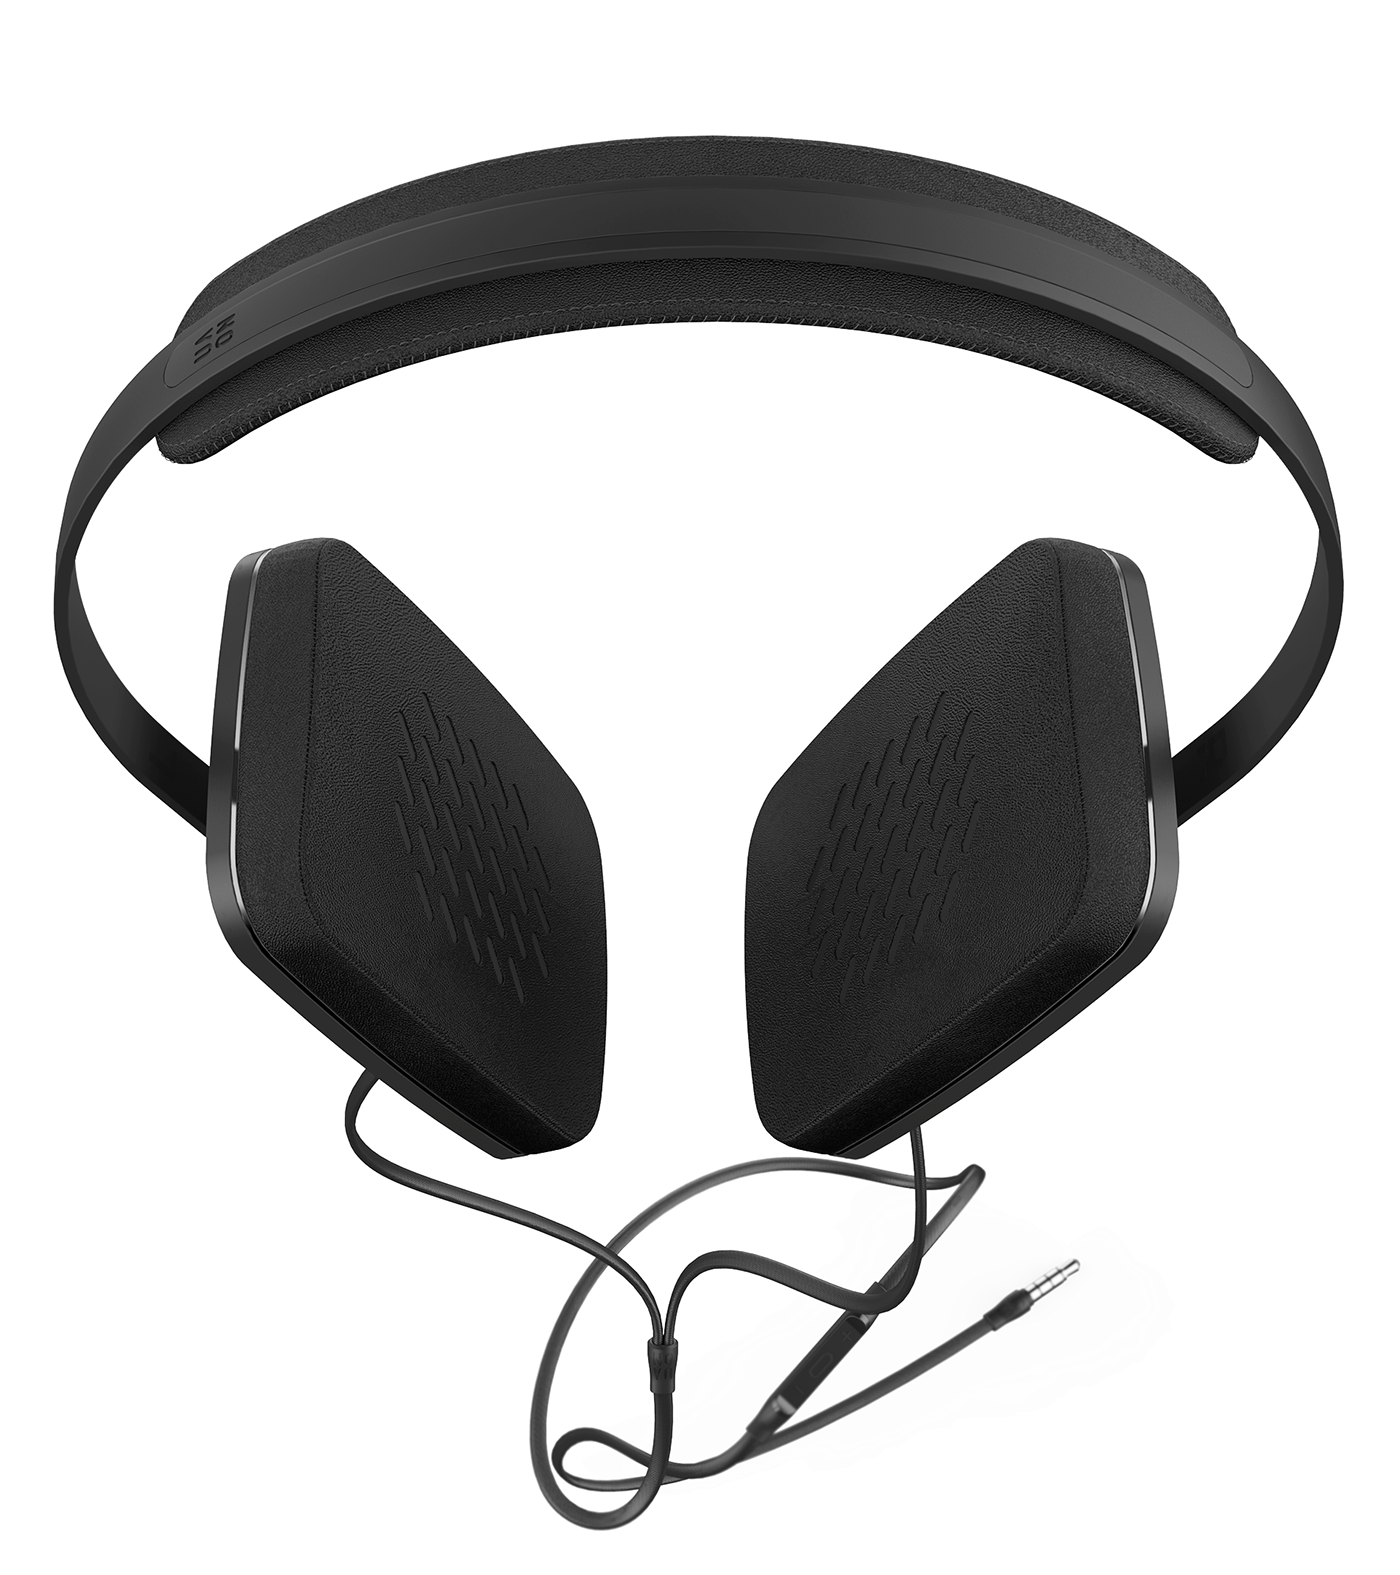 sound Audio Nova Aurelien gravelotte leather Style headphones speaker